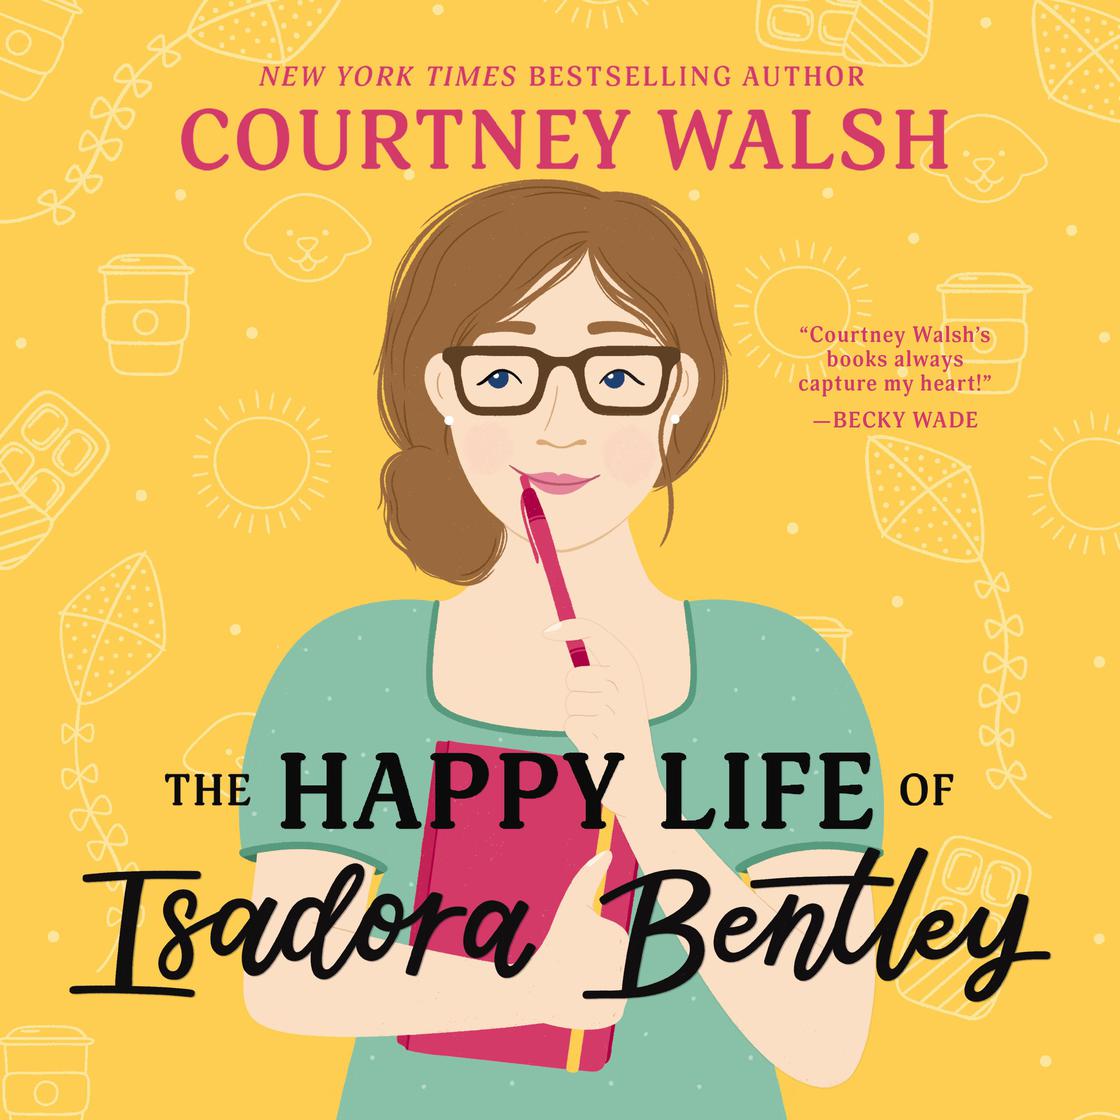 the happy life of isadora bently